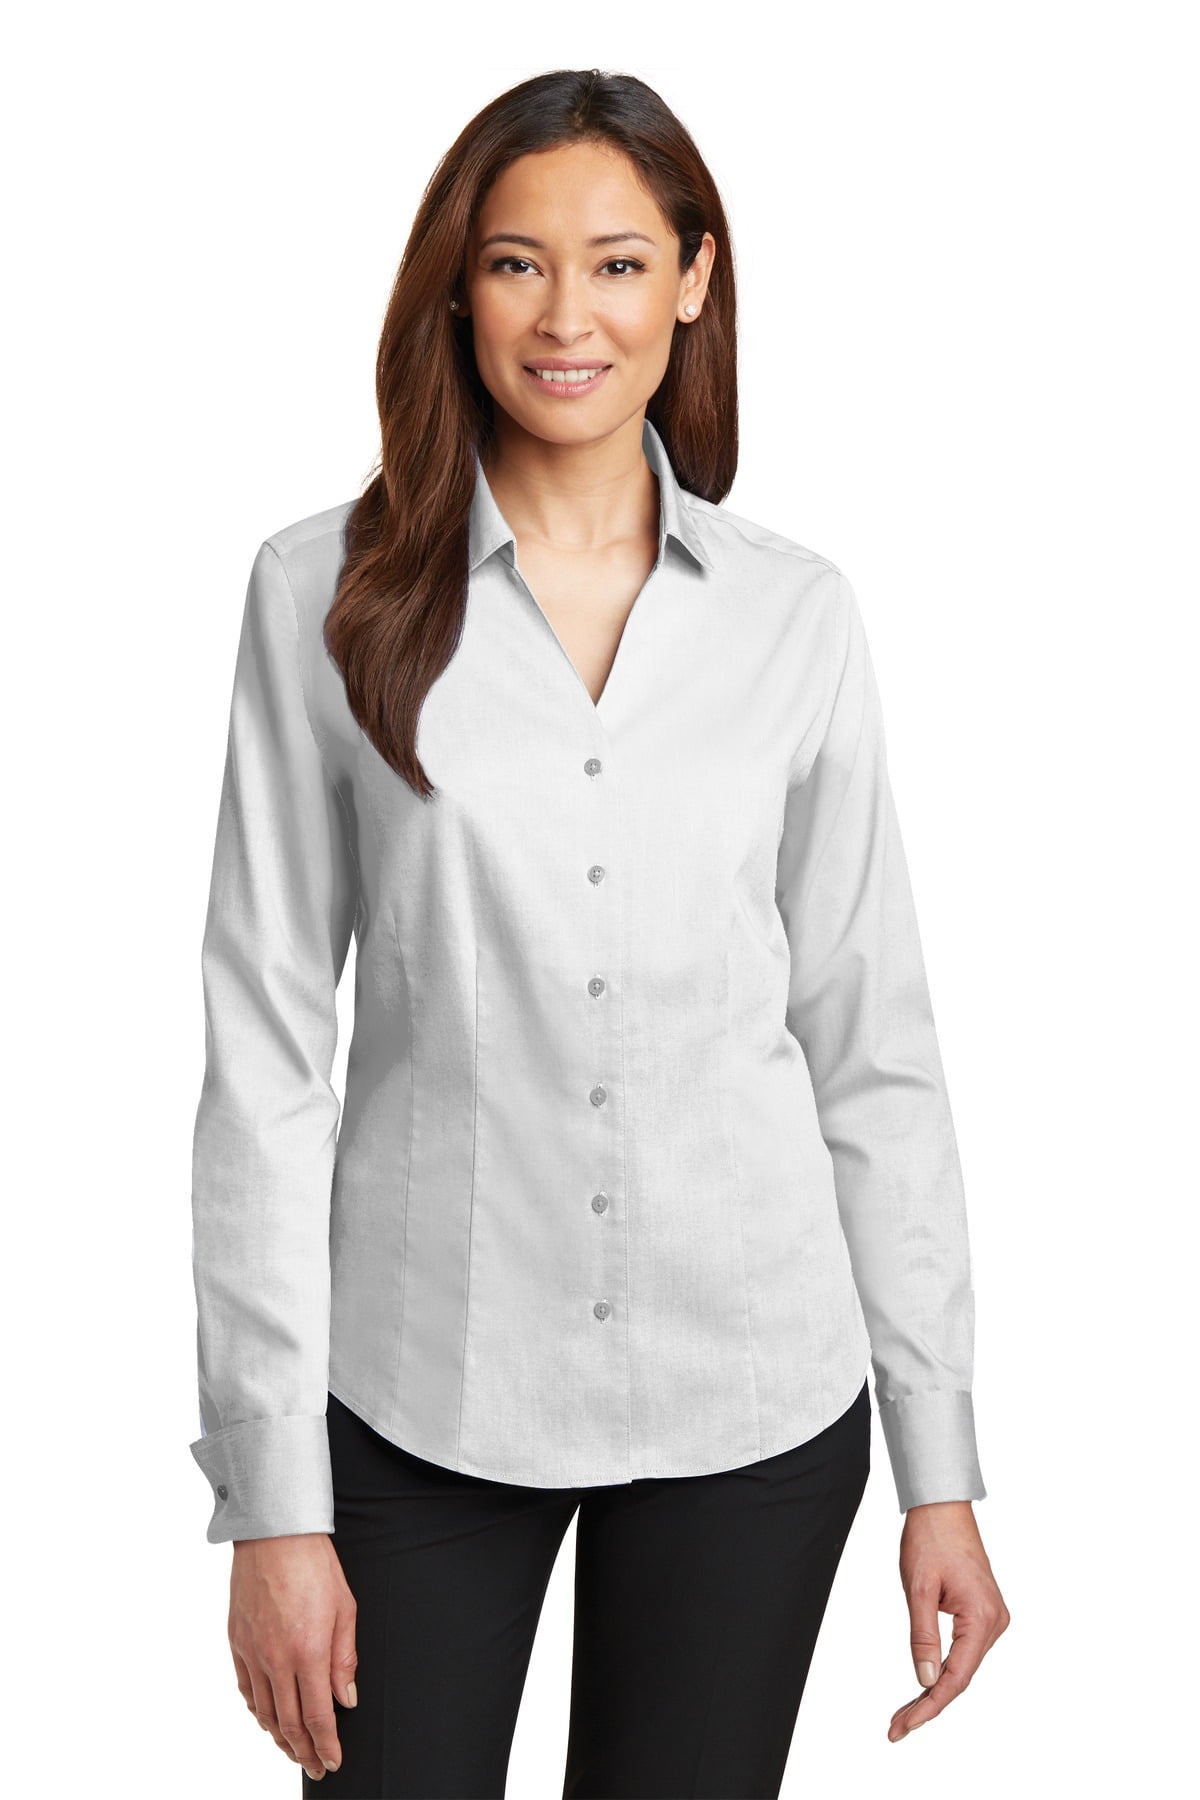 Mens 100% Cotton Non Iron White Pinpoint Button Cuff Dress Shirt 